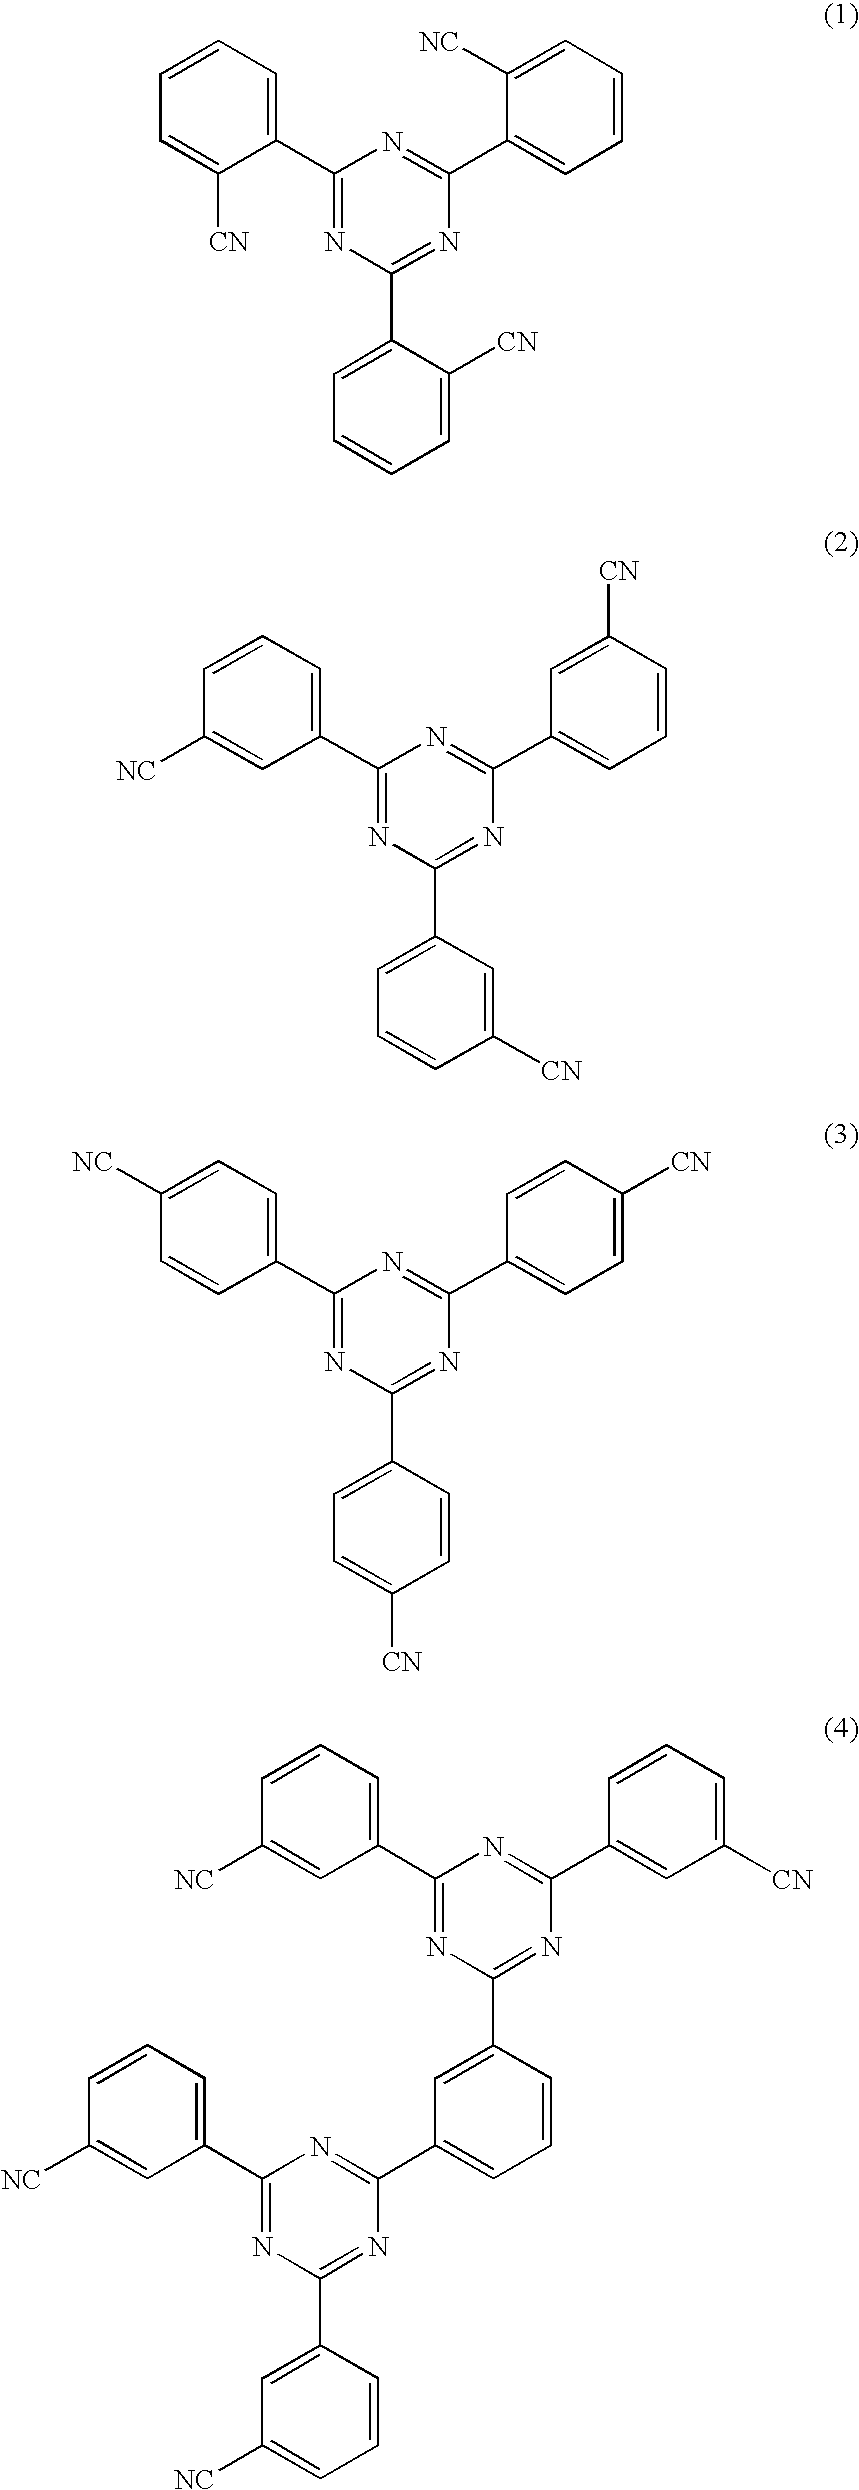 Production method of xylylenediamine